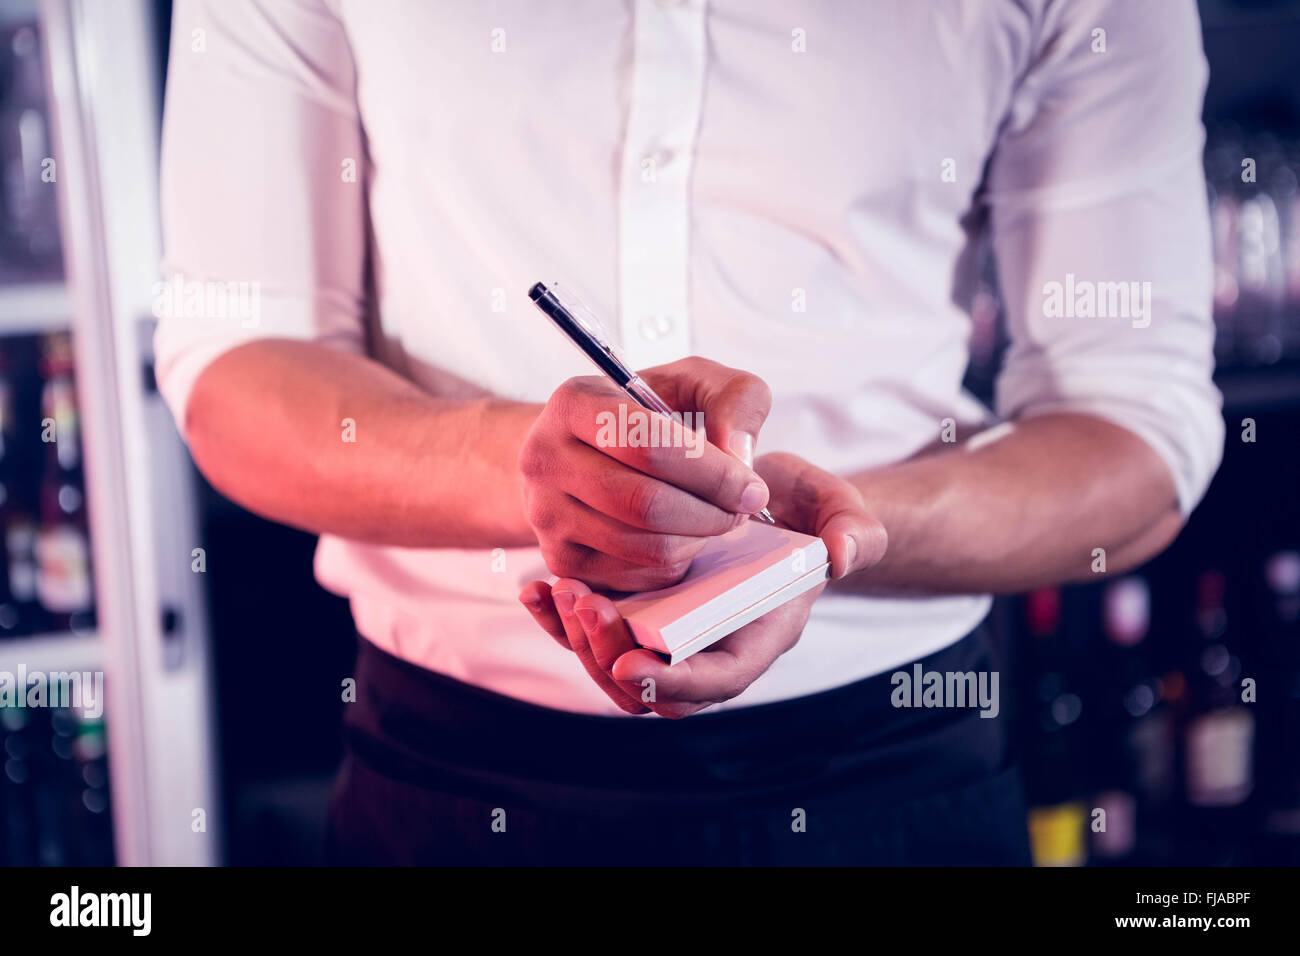 Waiter writing down an order Stock Photo